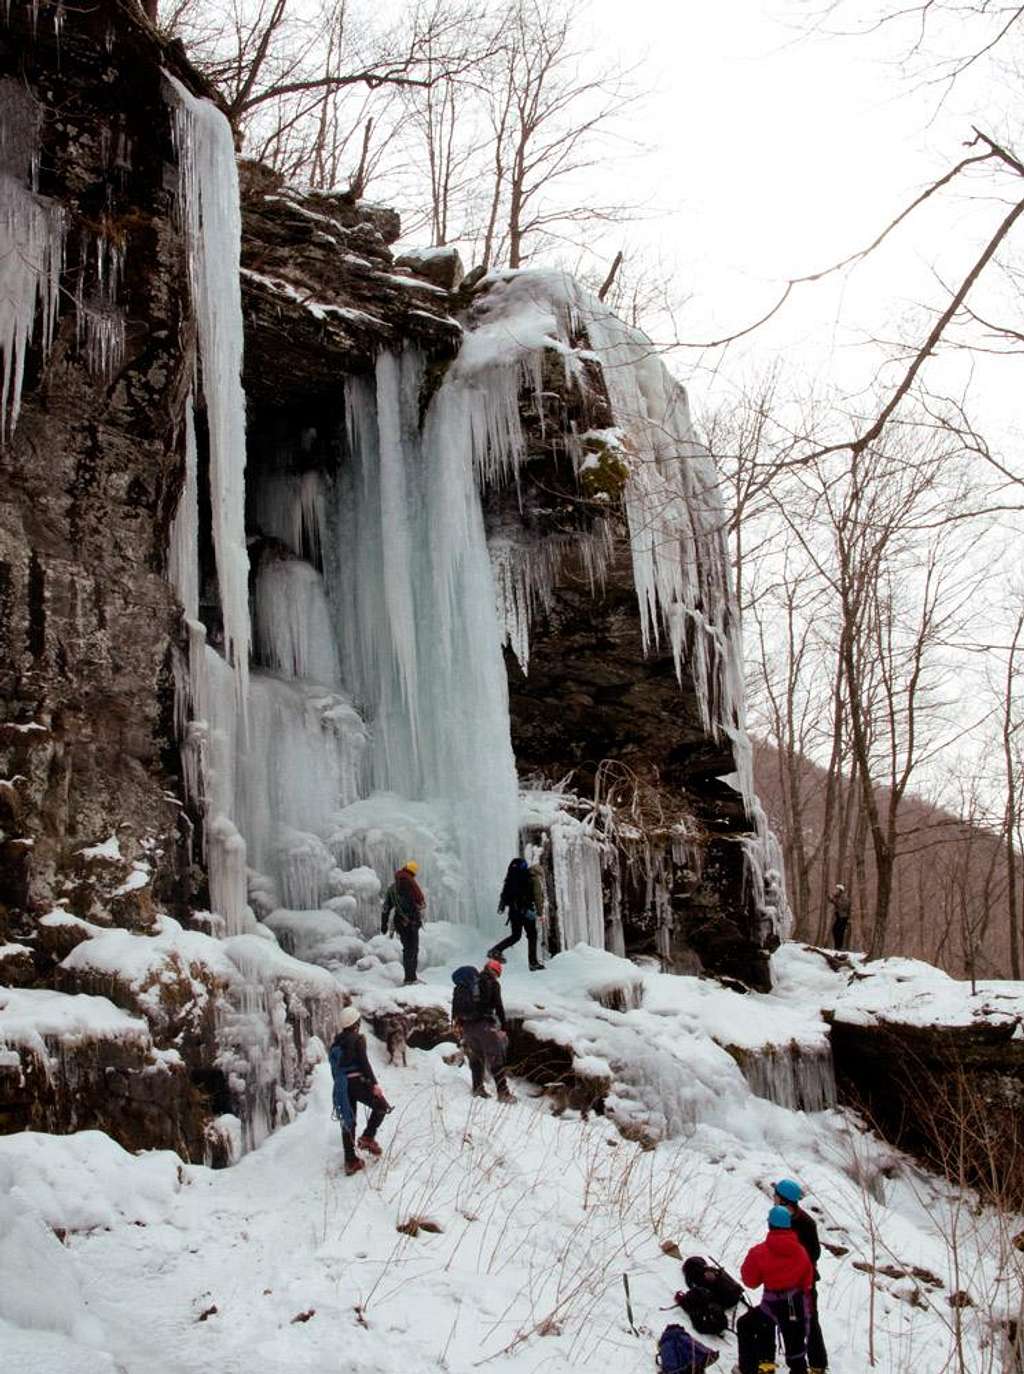 Catskill Ice climbing